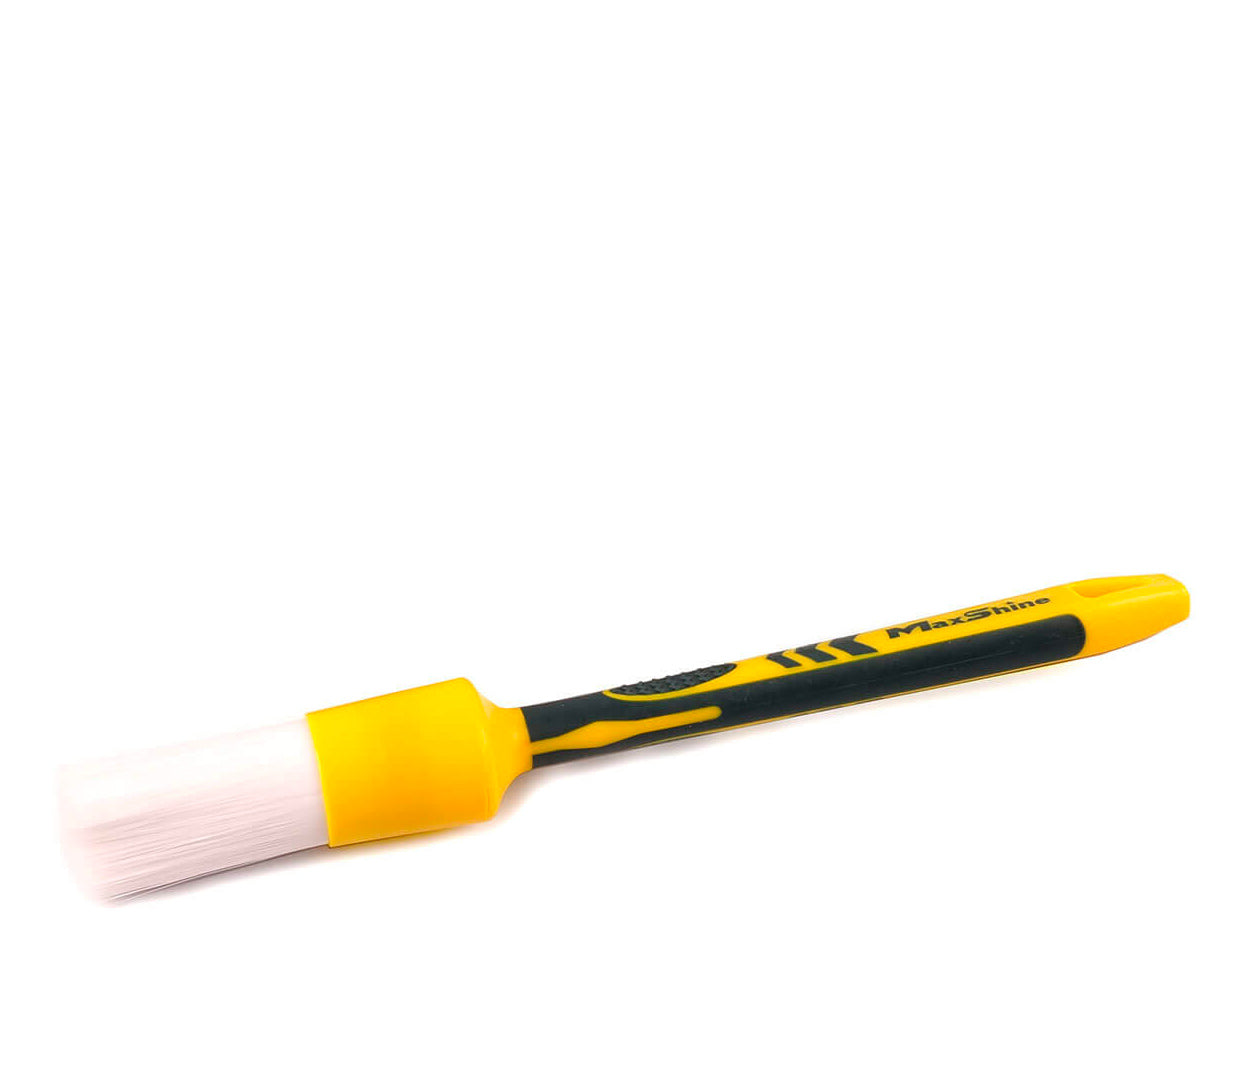 Maxshine Detailing Brush - White 14mm